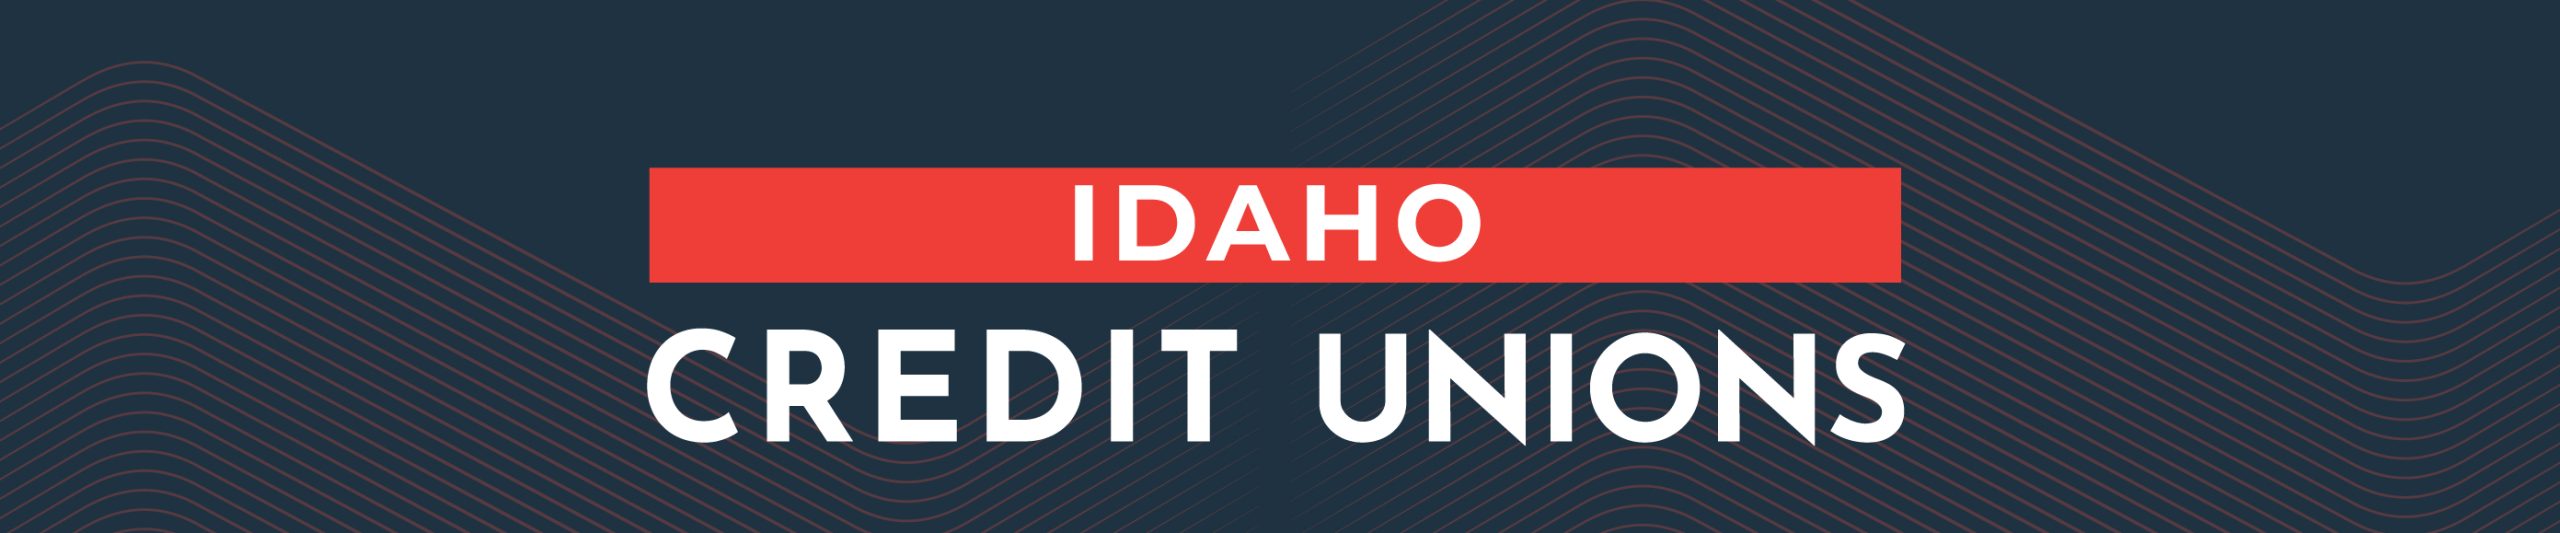 Idaho Loves Credit Unions